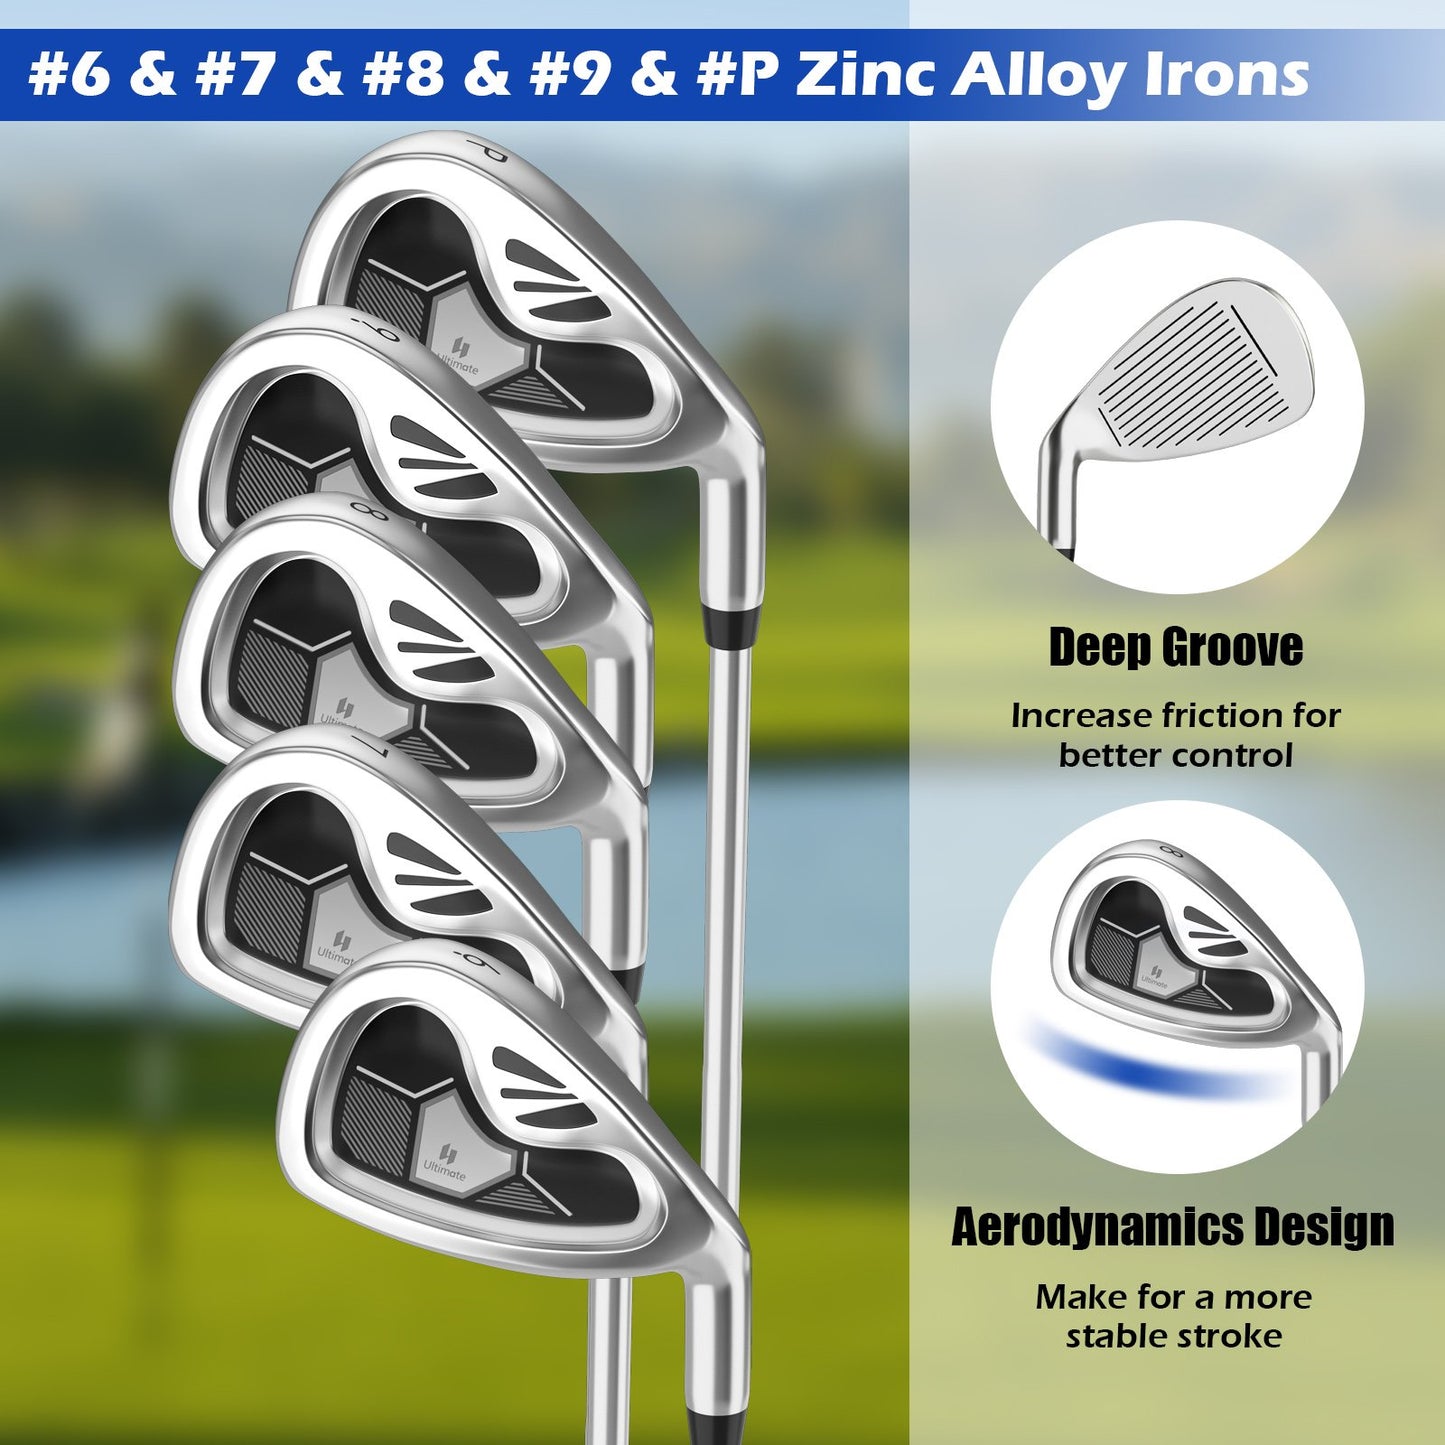 Men's 9 Pieces Complete Golf Club Set, Gray